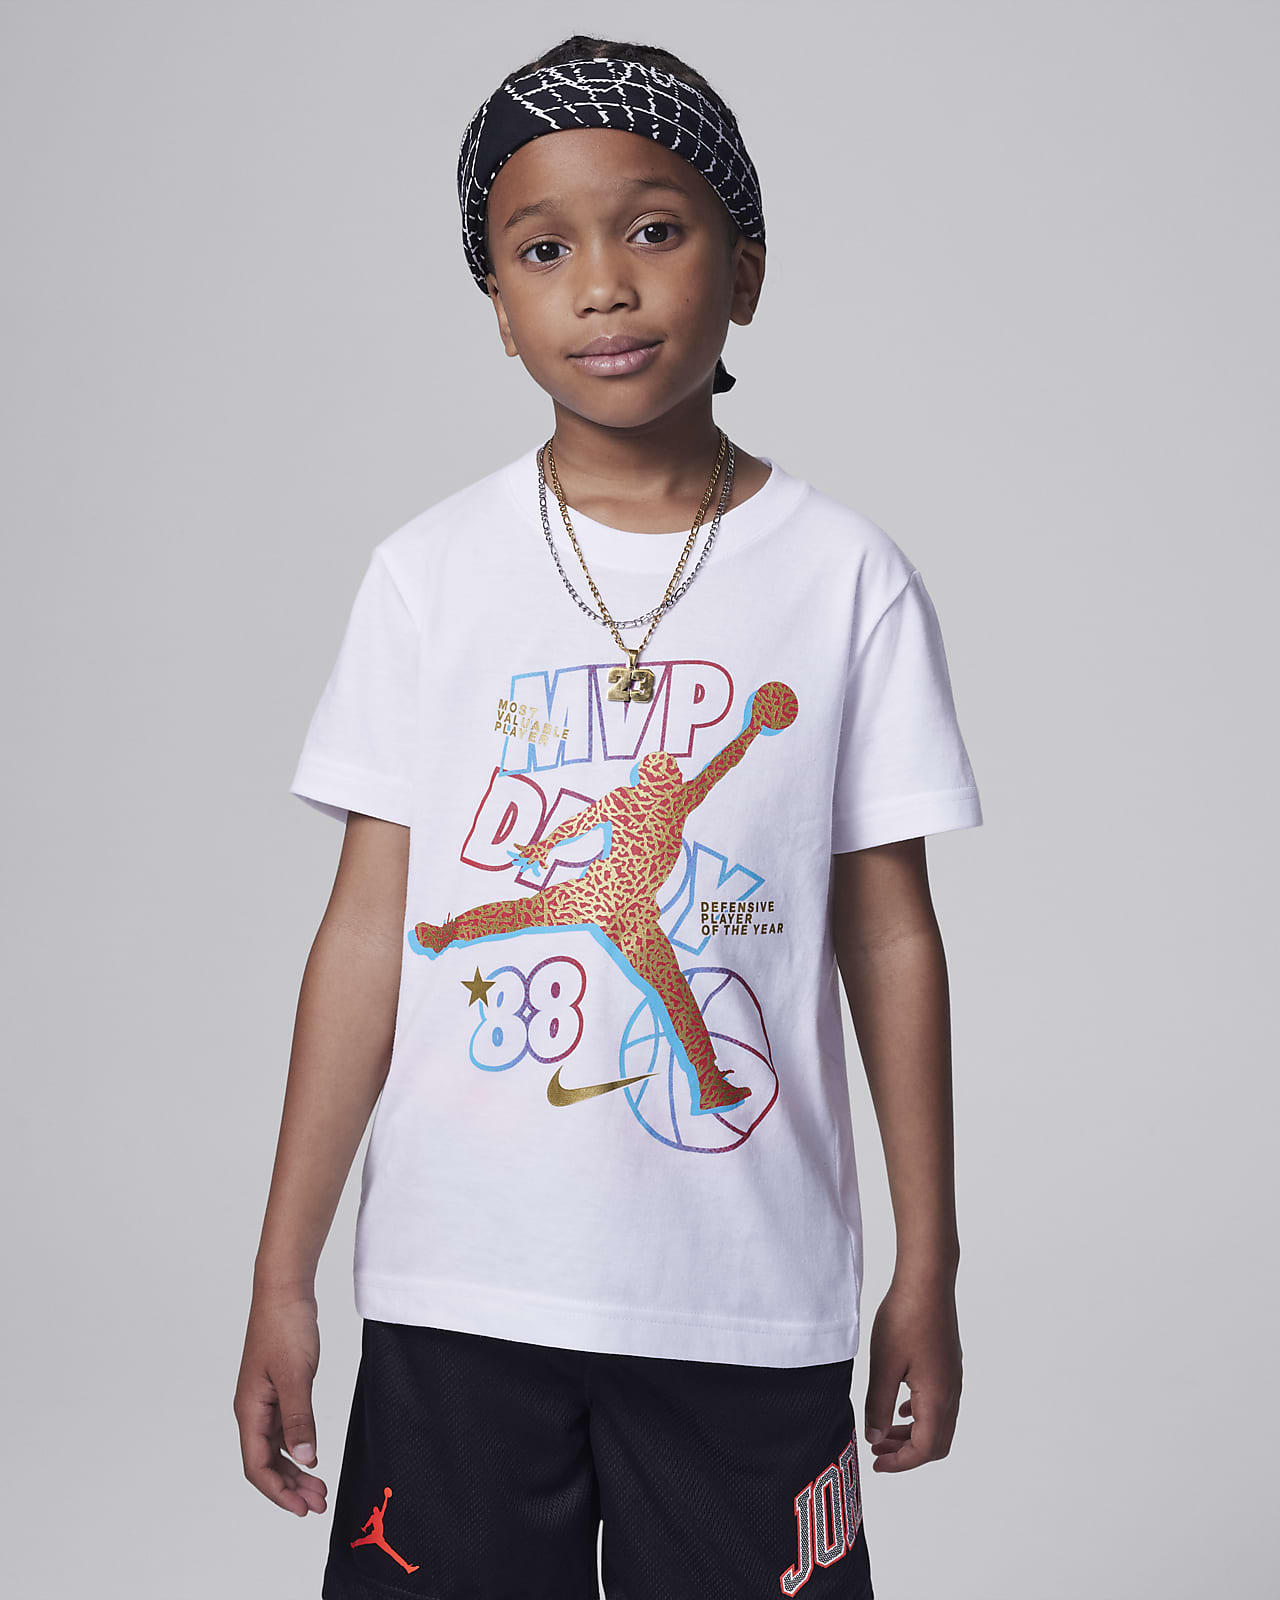 Michael Jordan Jersey History Kids T-Shirt for Sale by